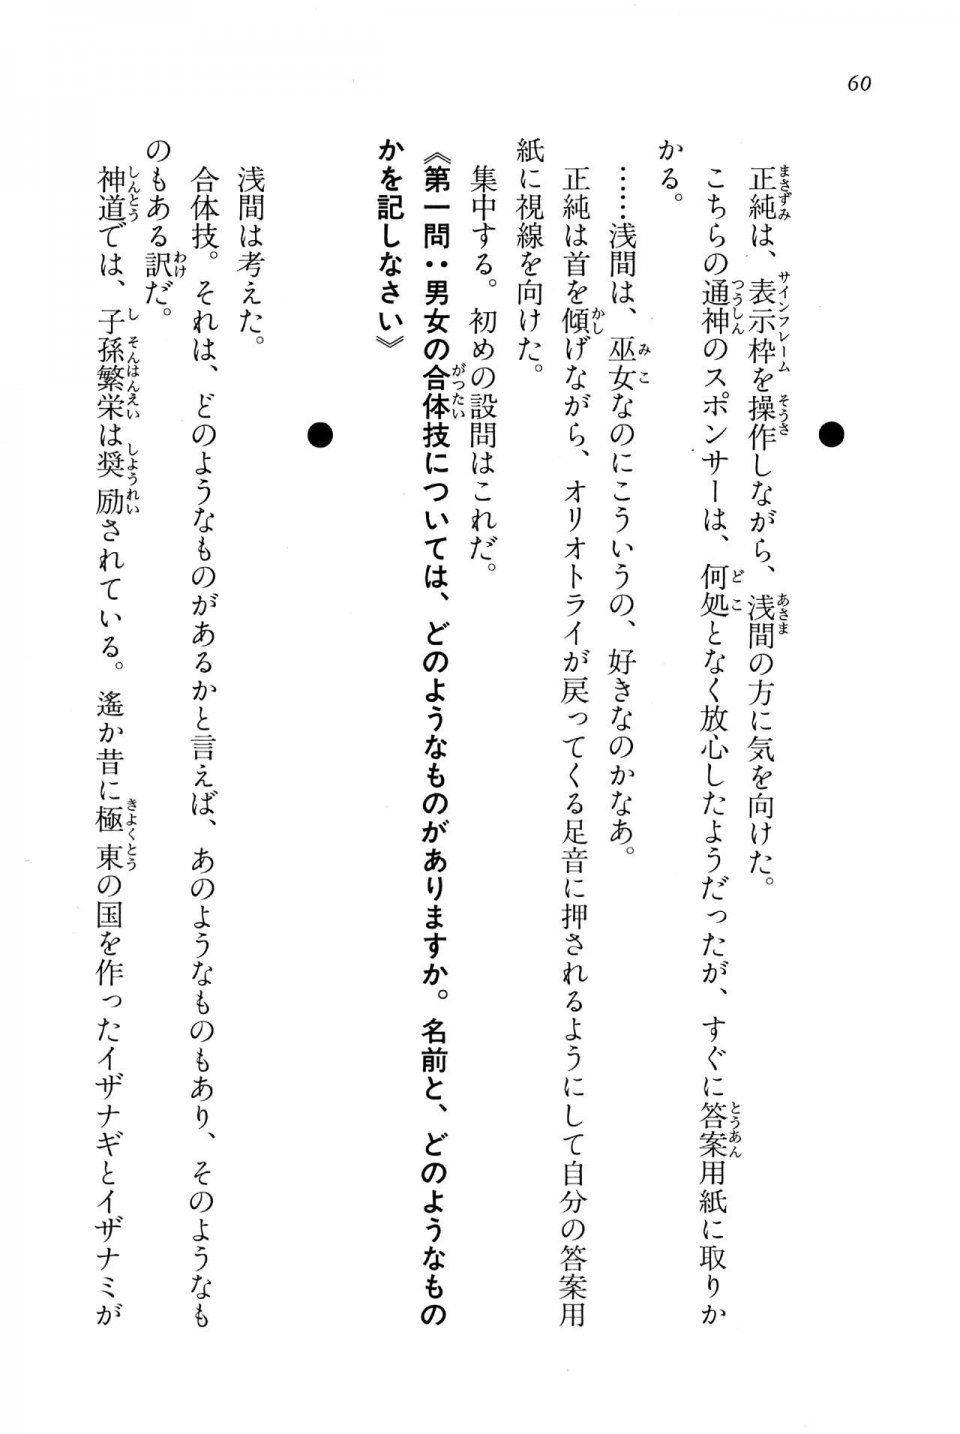 Kyoukai Senjou no Horizon BD Special Mininovel Vol 7(4A) - Photo #64